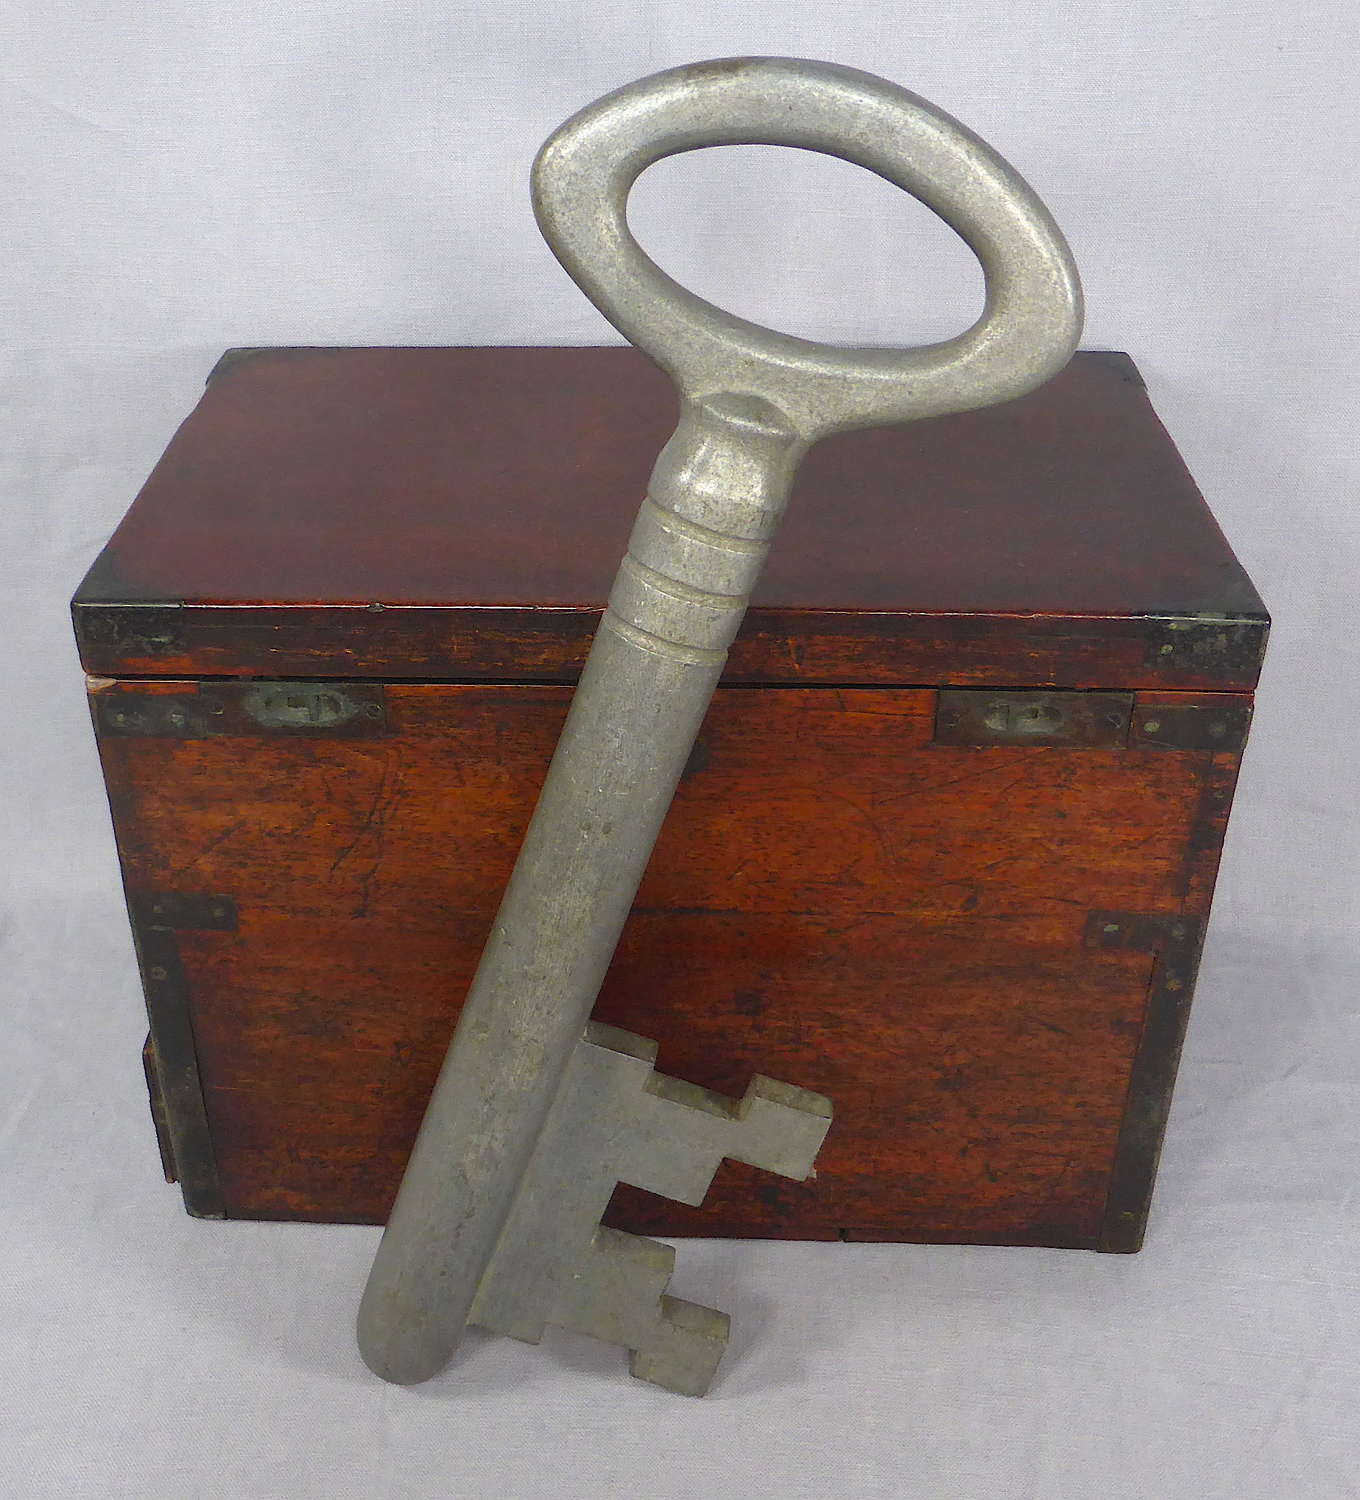 Oversized Locksmith's Display Key